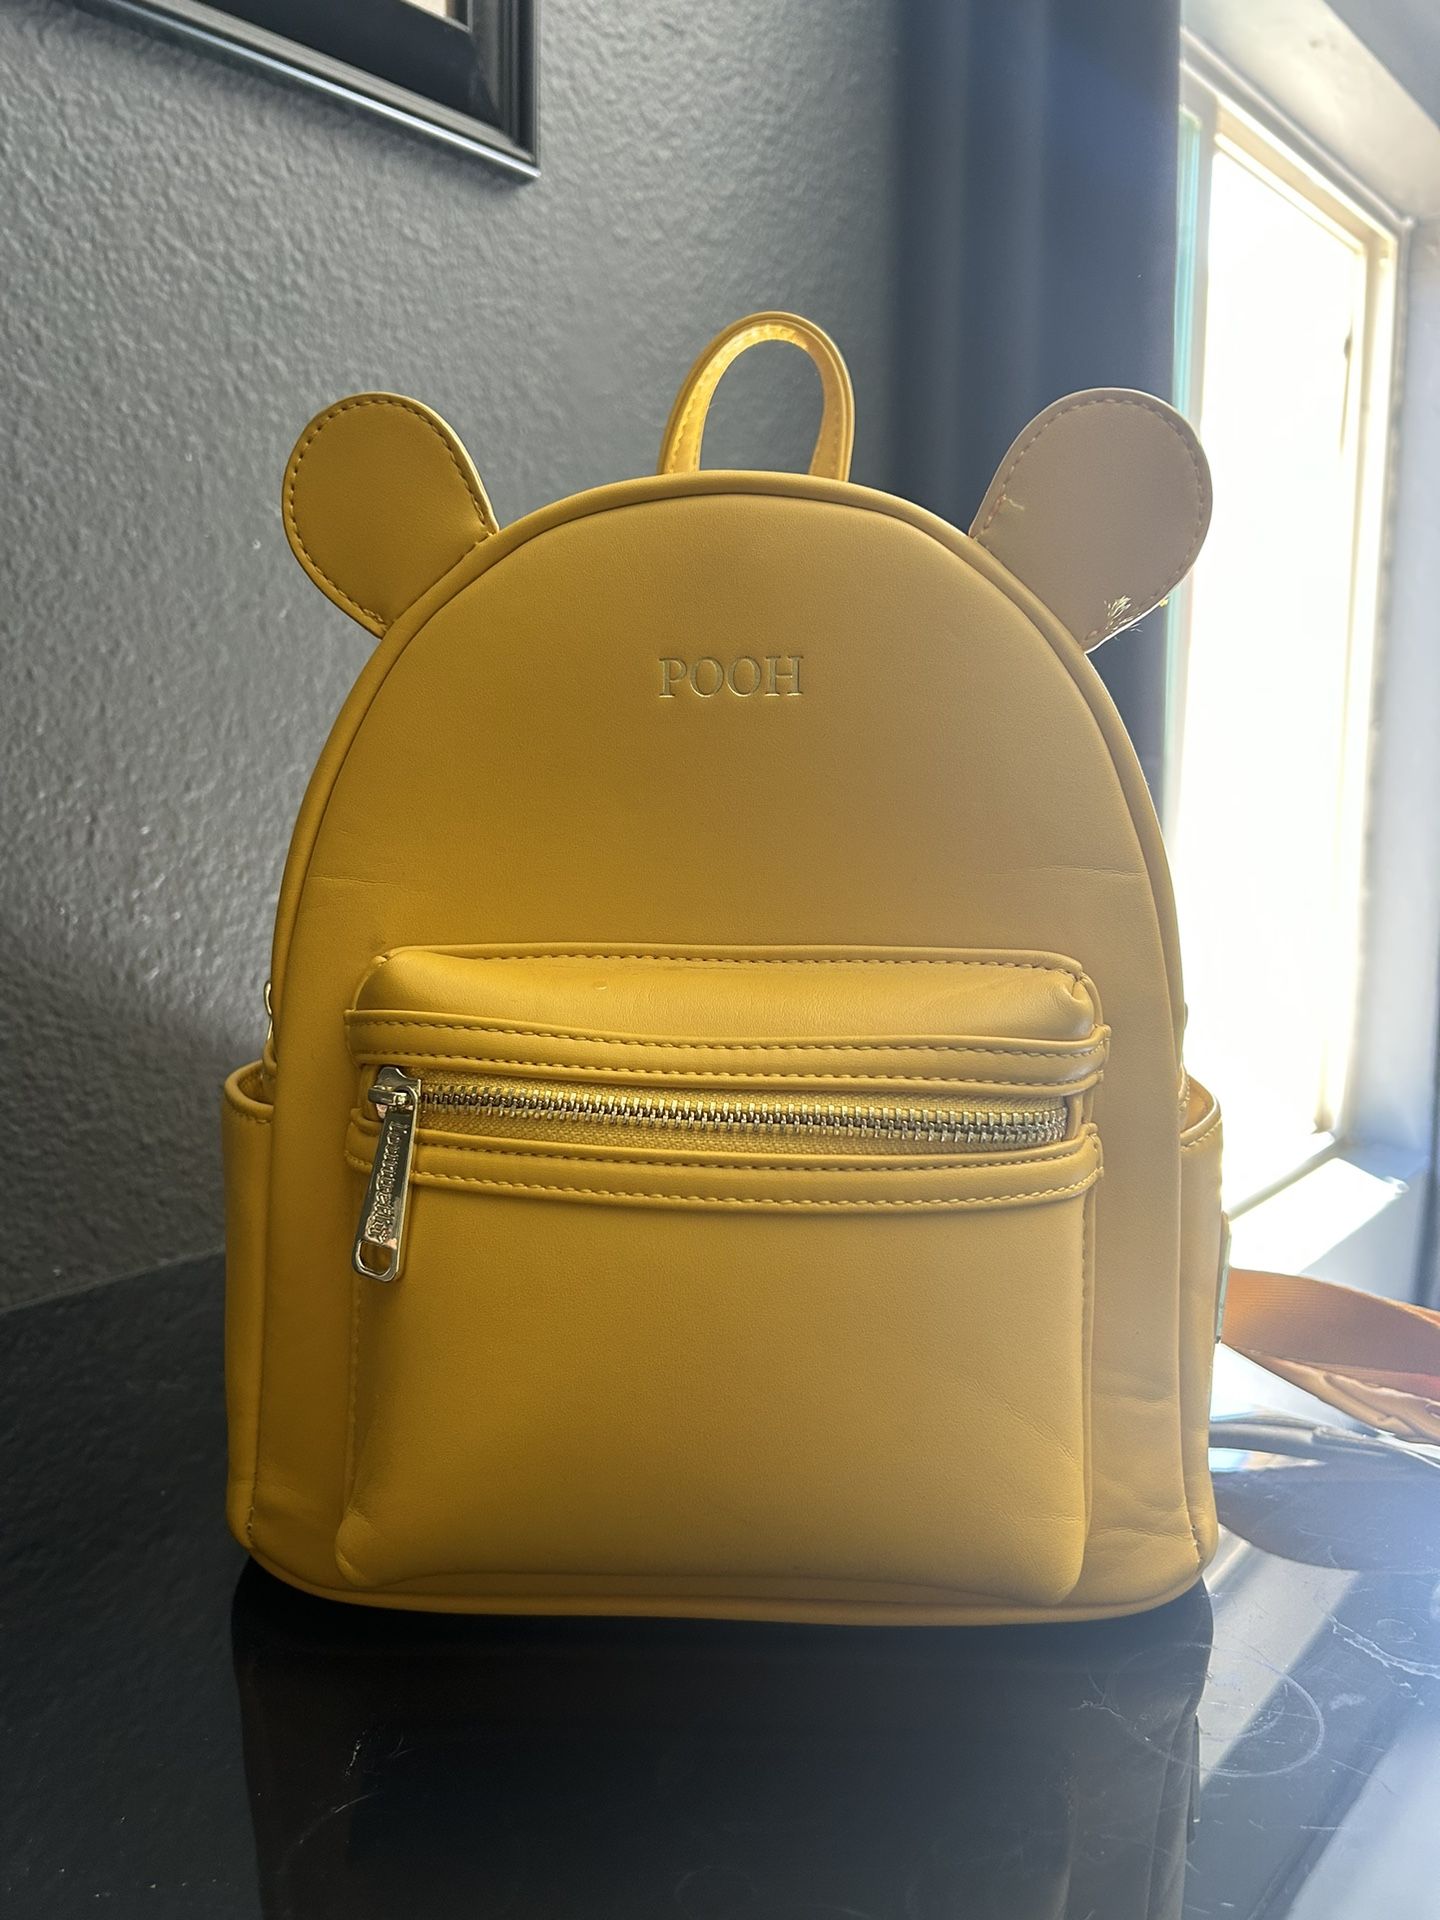 Pooh Disney Backpack